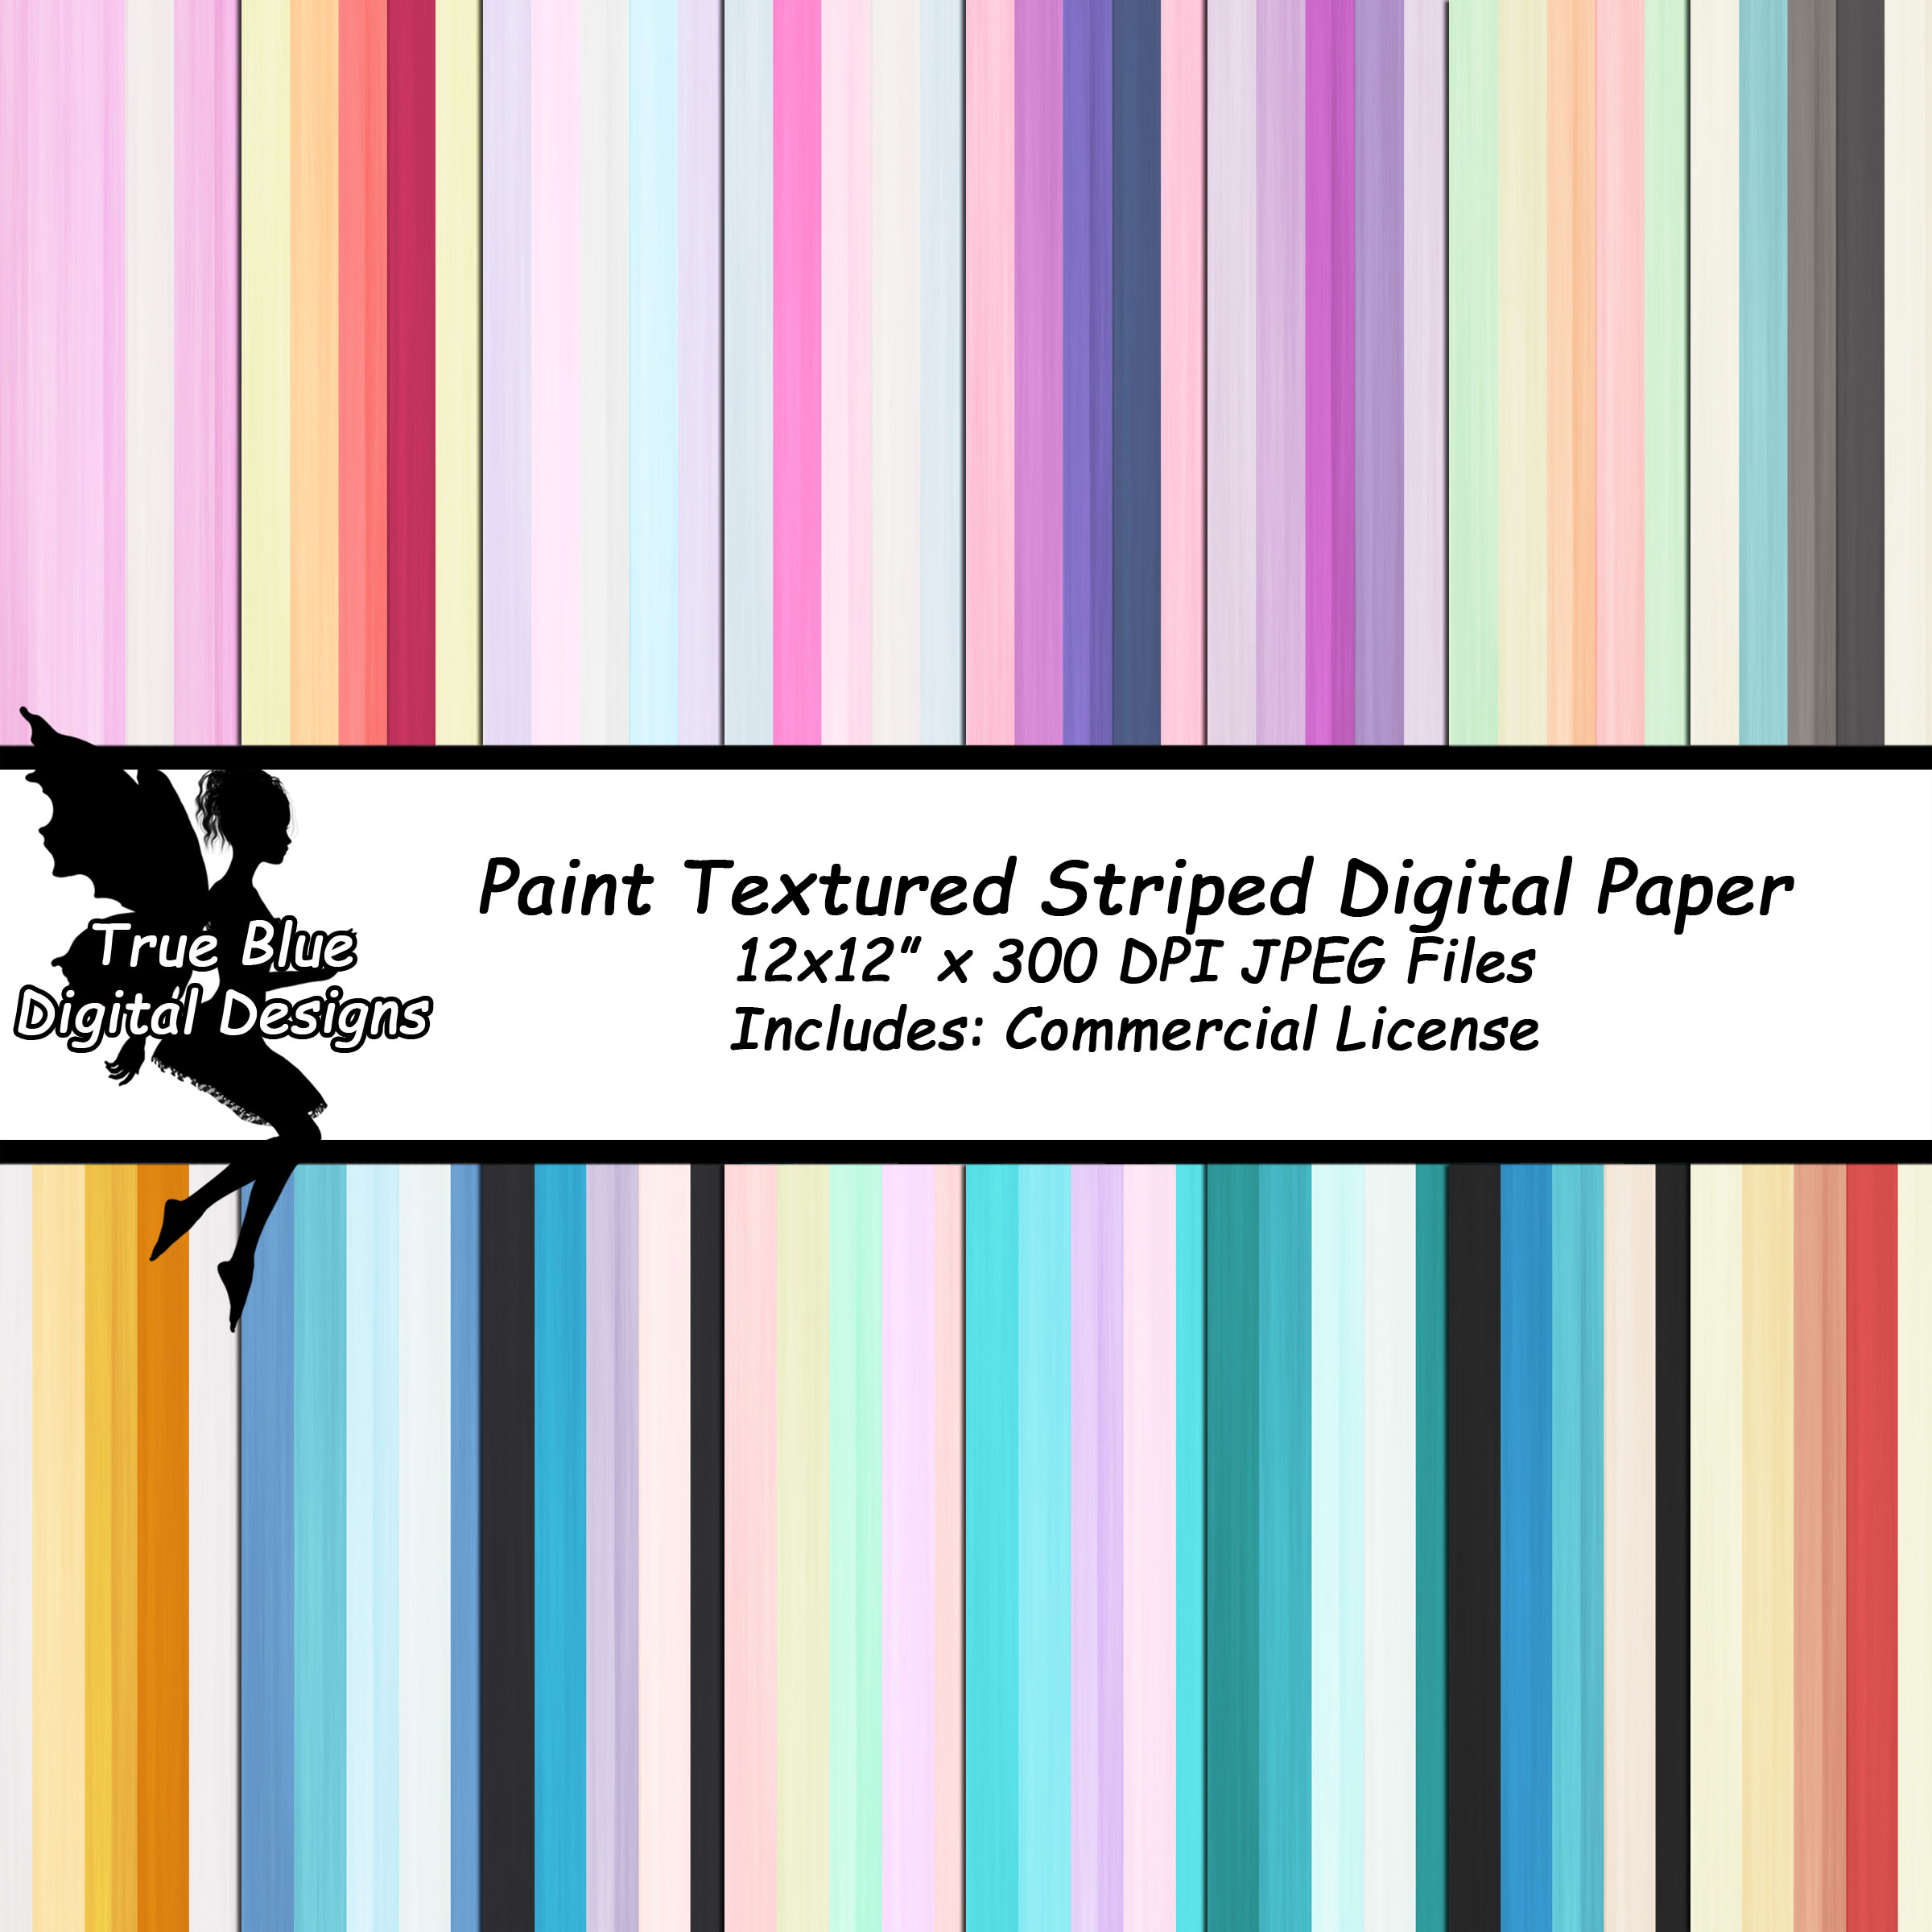 Paint Textured Striped Digital Paper